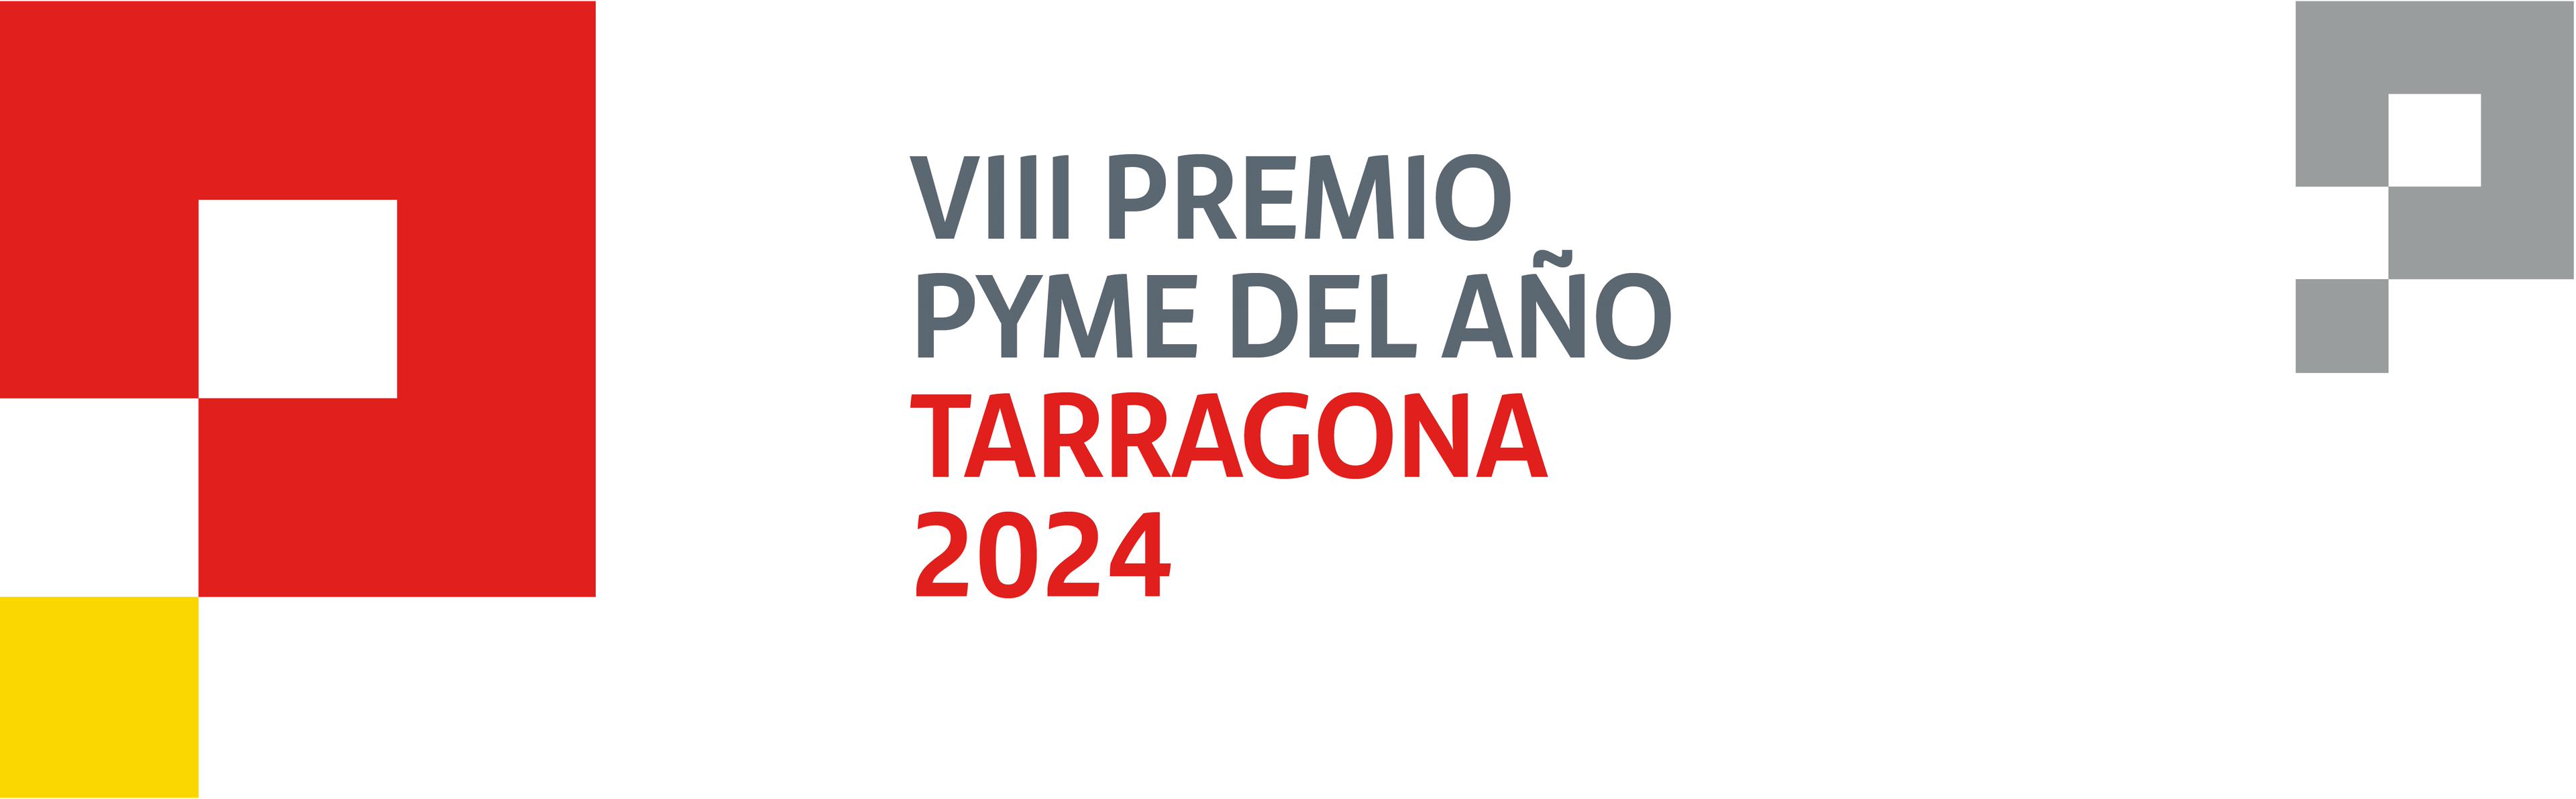 tarragona-banner-formulario-01.jpg